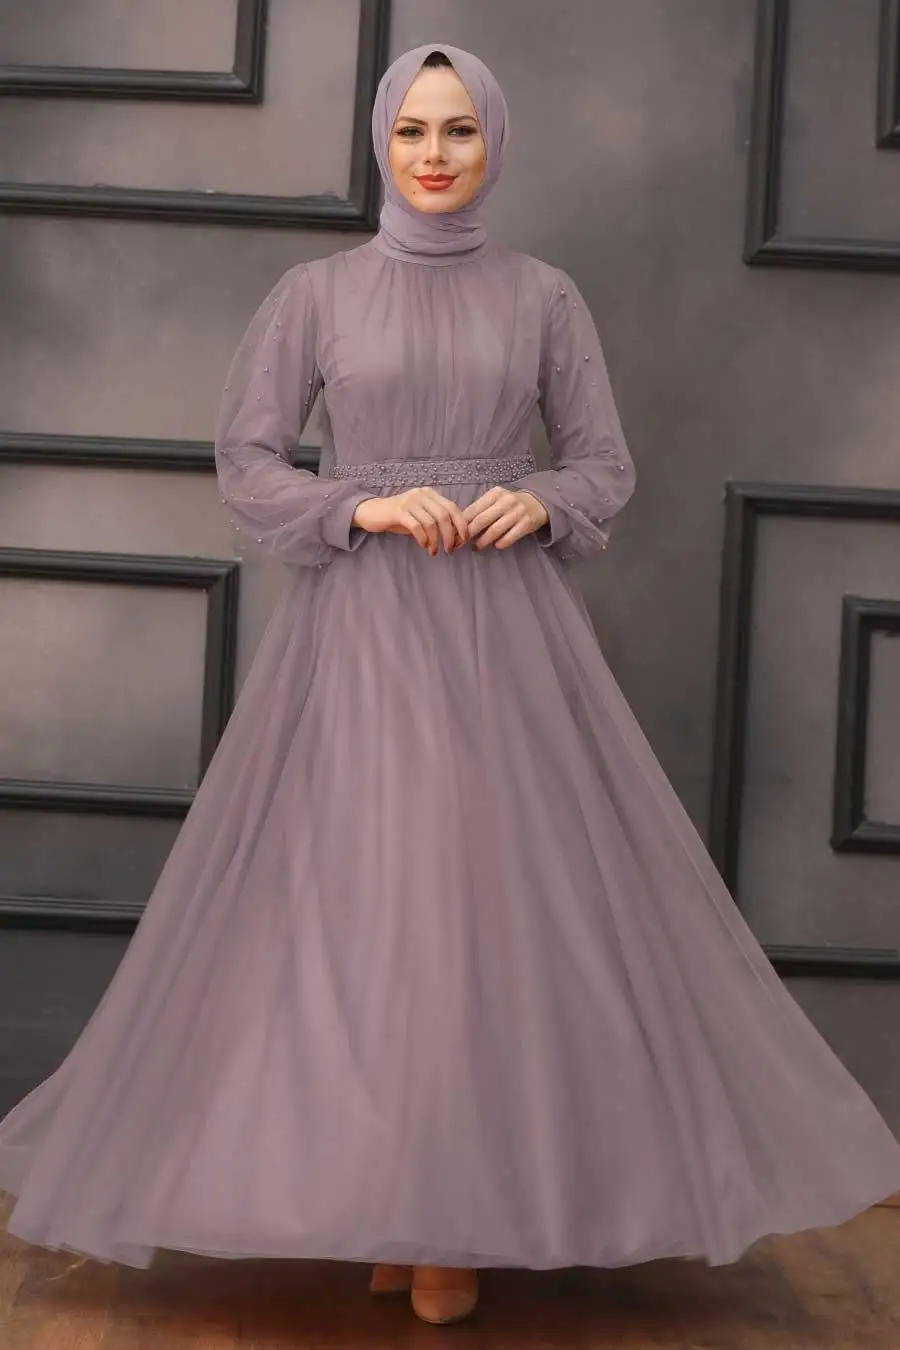 2023 OEM/ODM wholesale ladies cotton dubai abaya femmes robe musulmane women muslim Long maxi dress